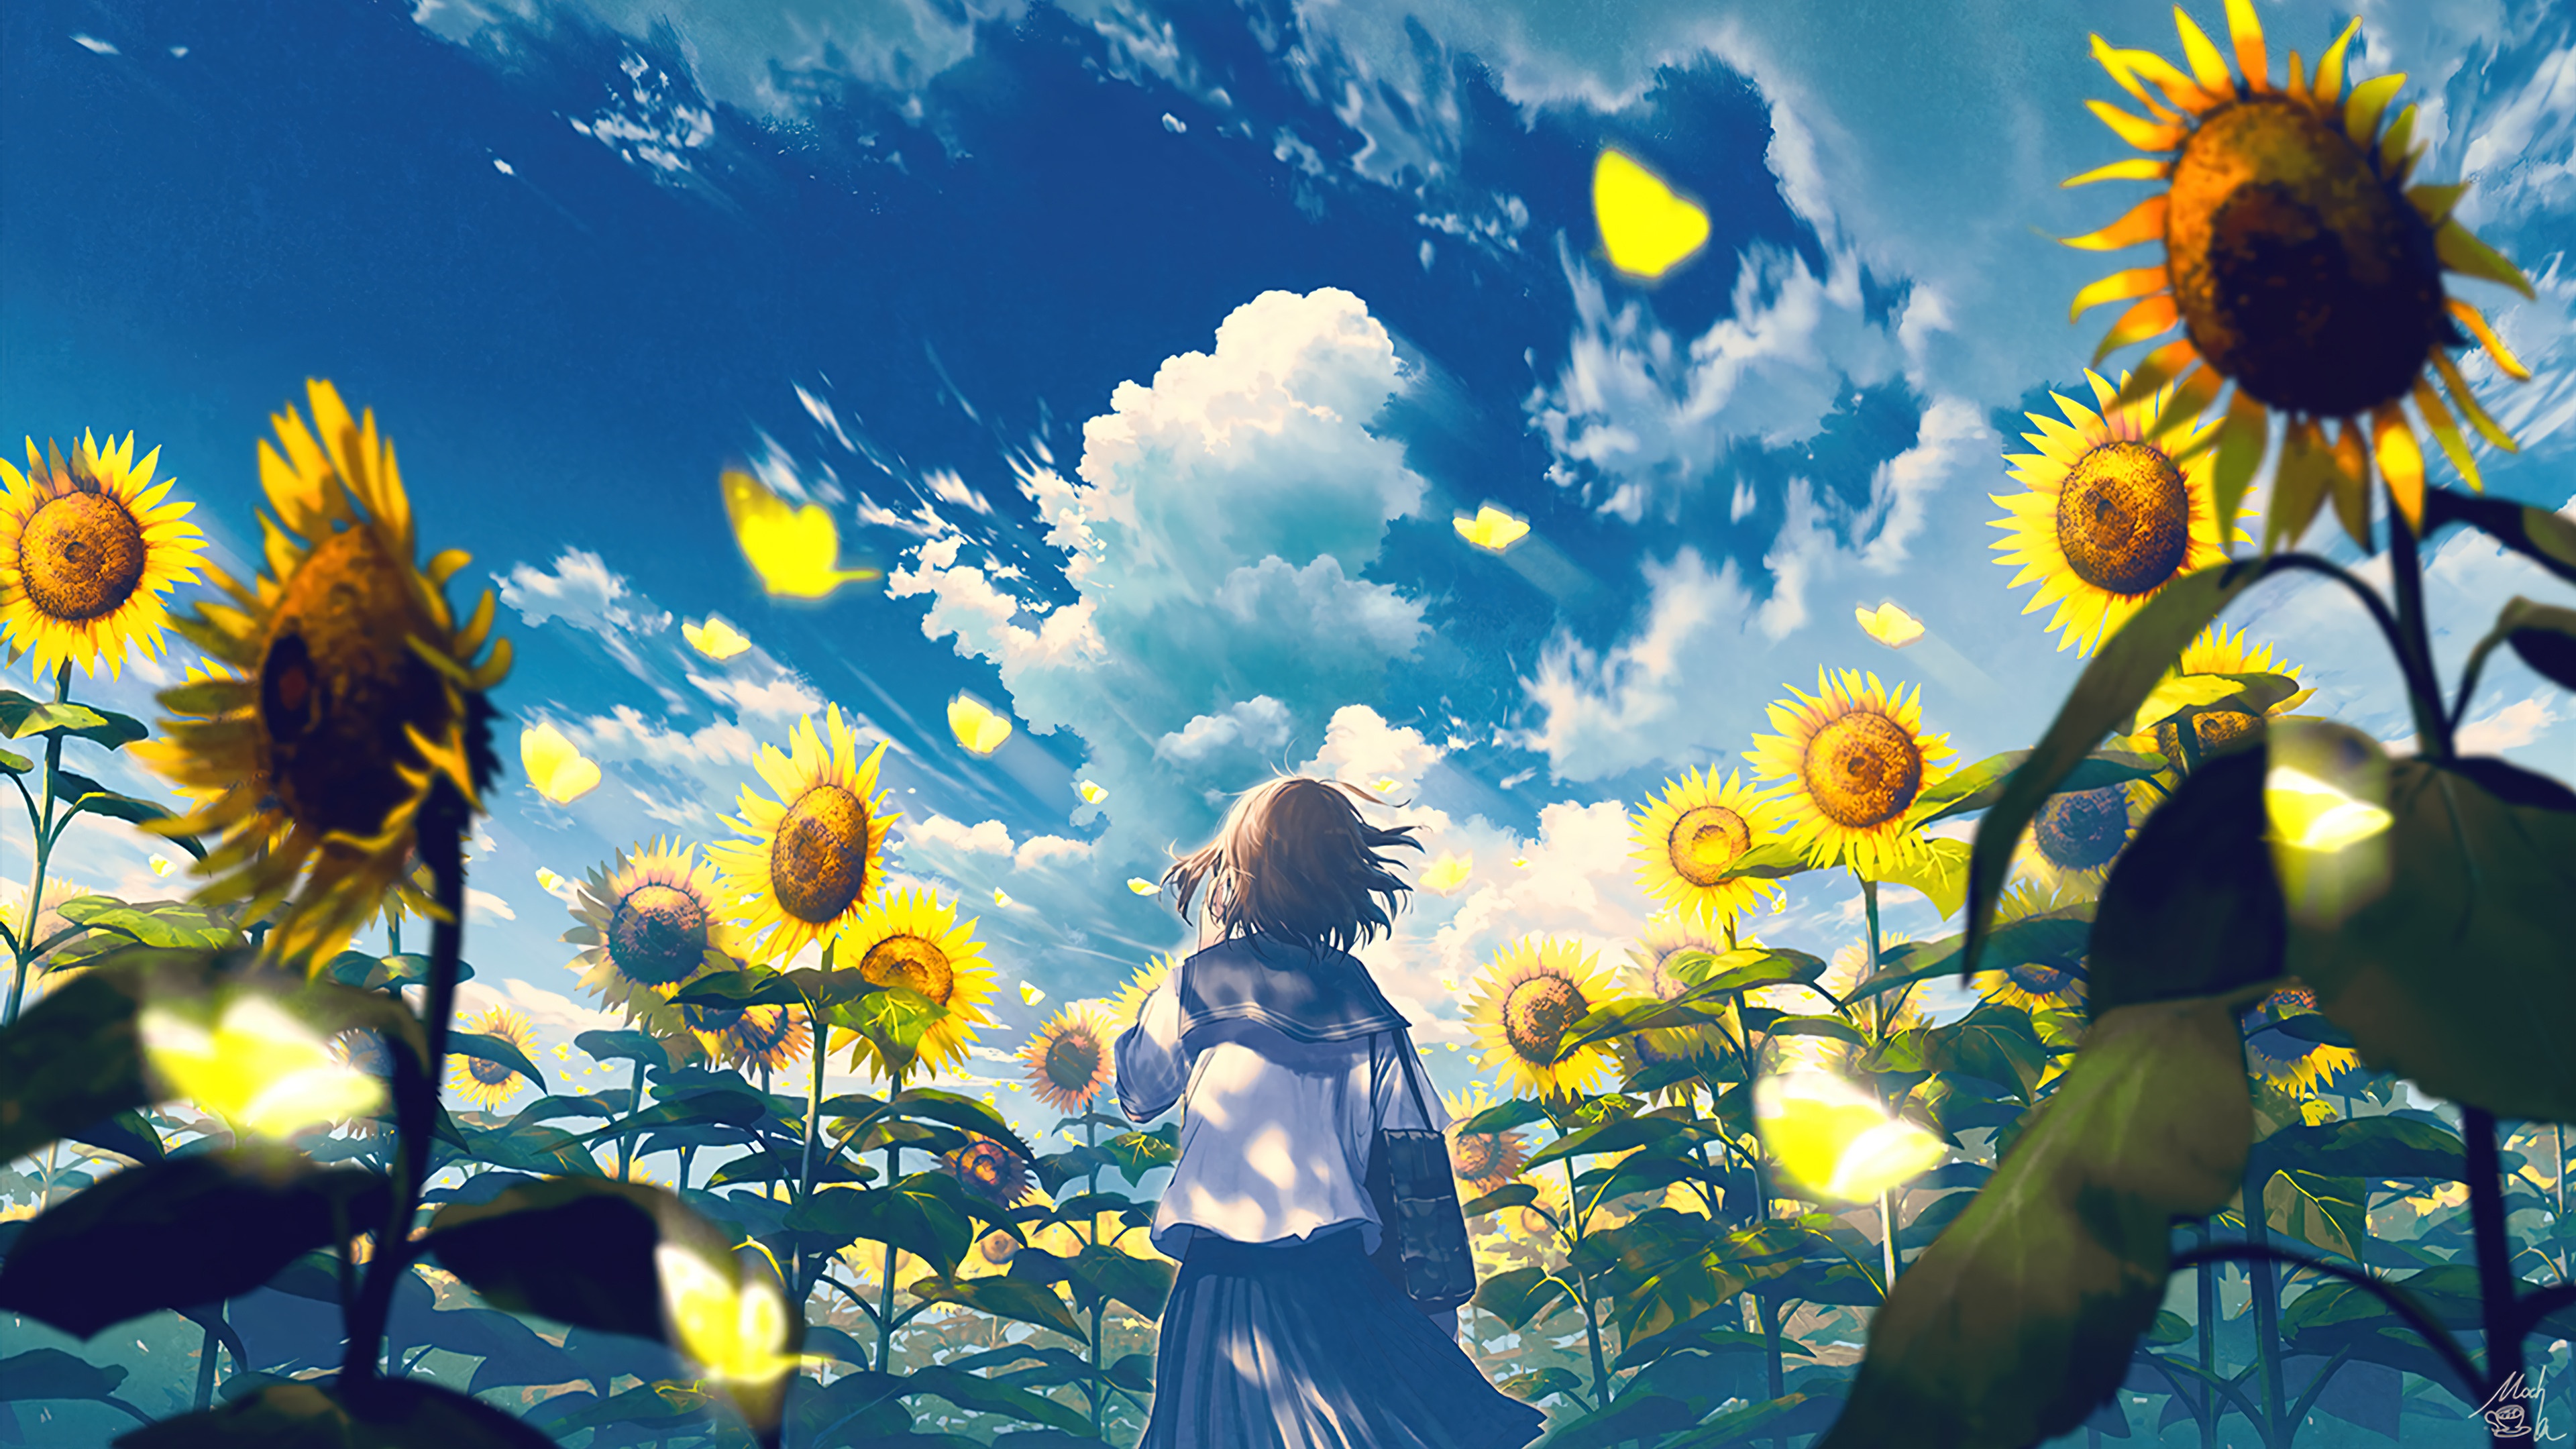 Sunflower symbolism in anime | Anime Amino